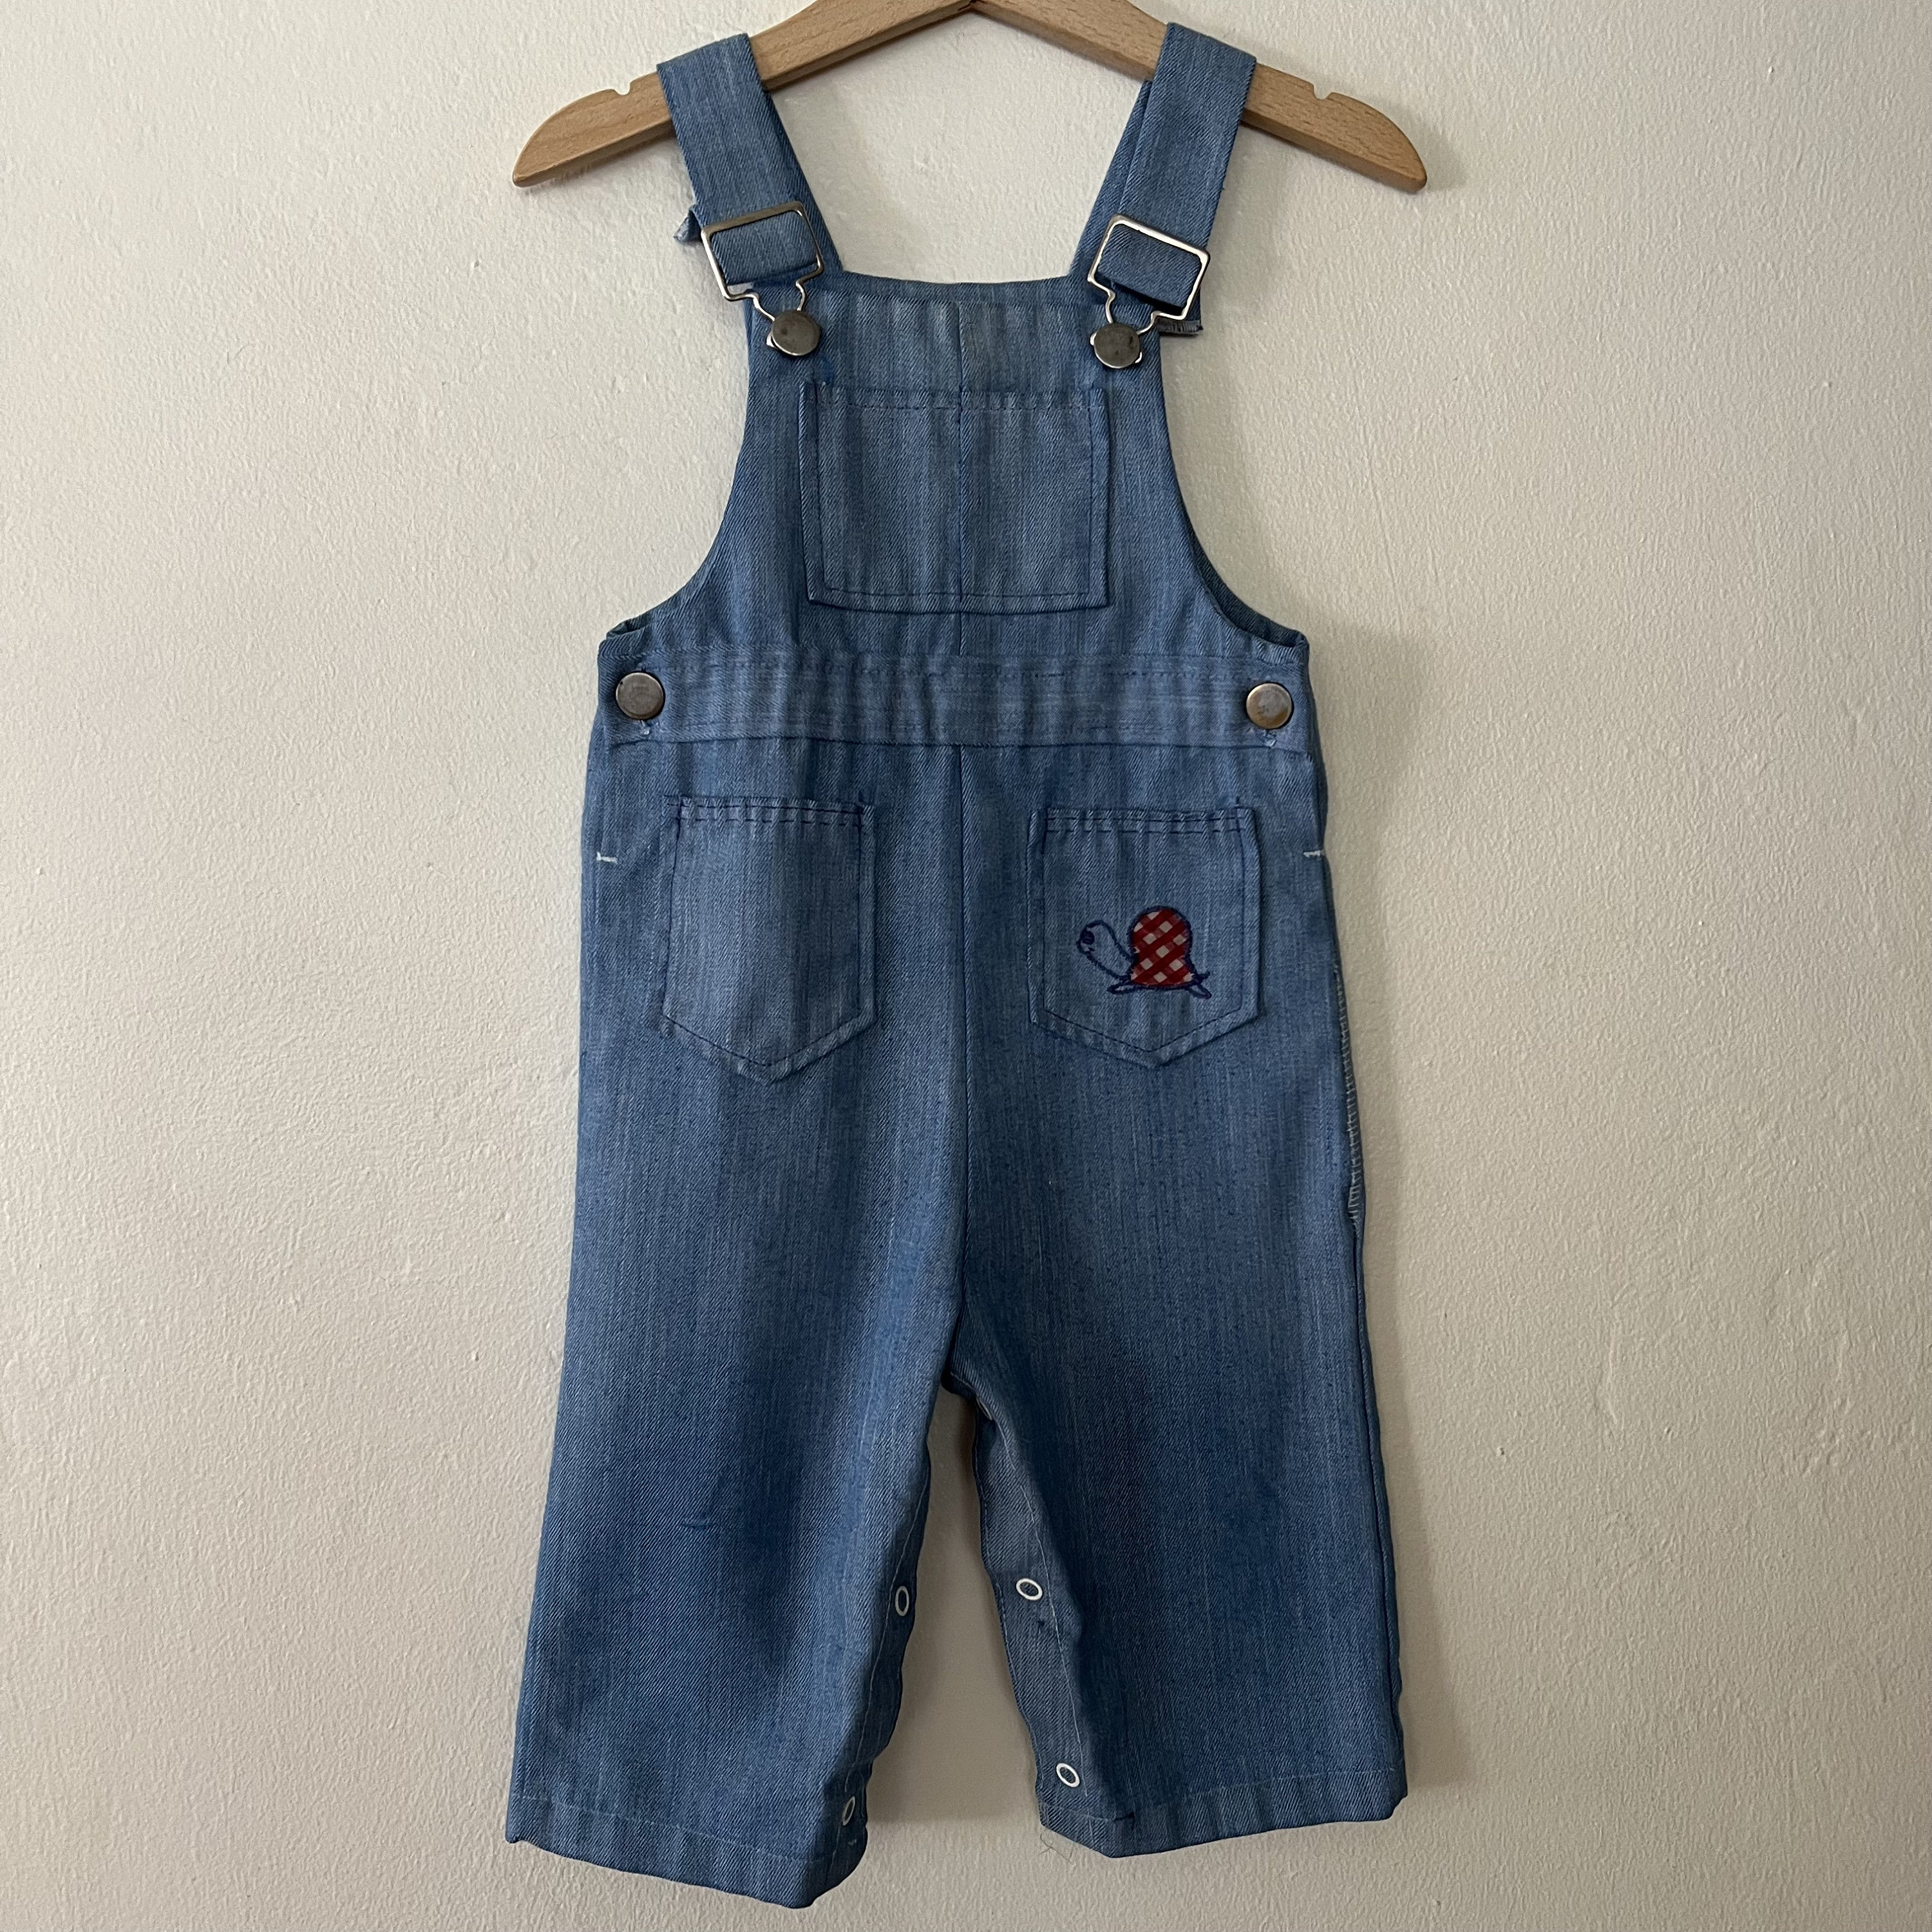 Kmbangi Toddler Kids Baby Girls Bib Overalls Long Suspender Pants Jumpsuit Trousers 